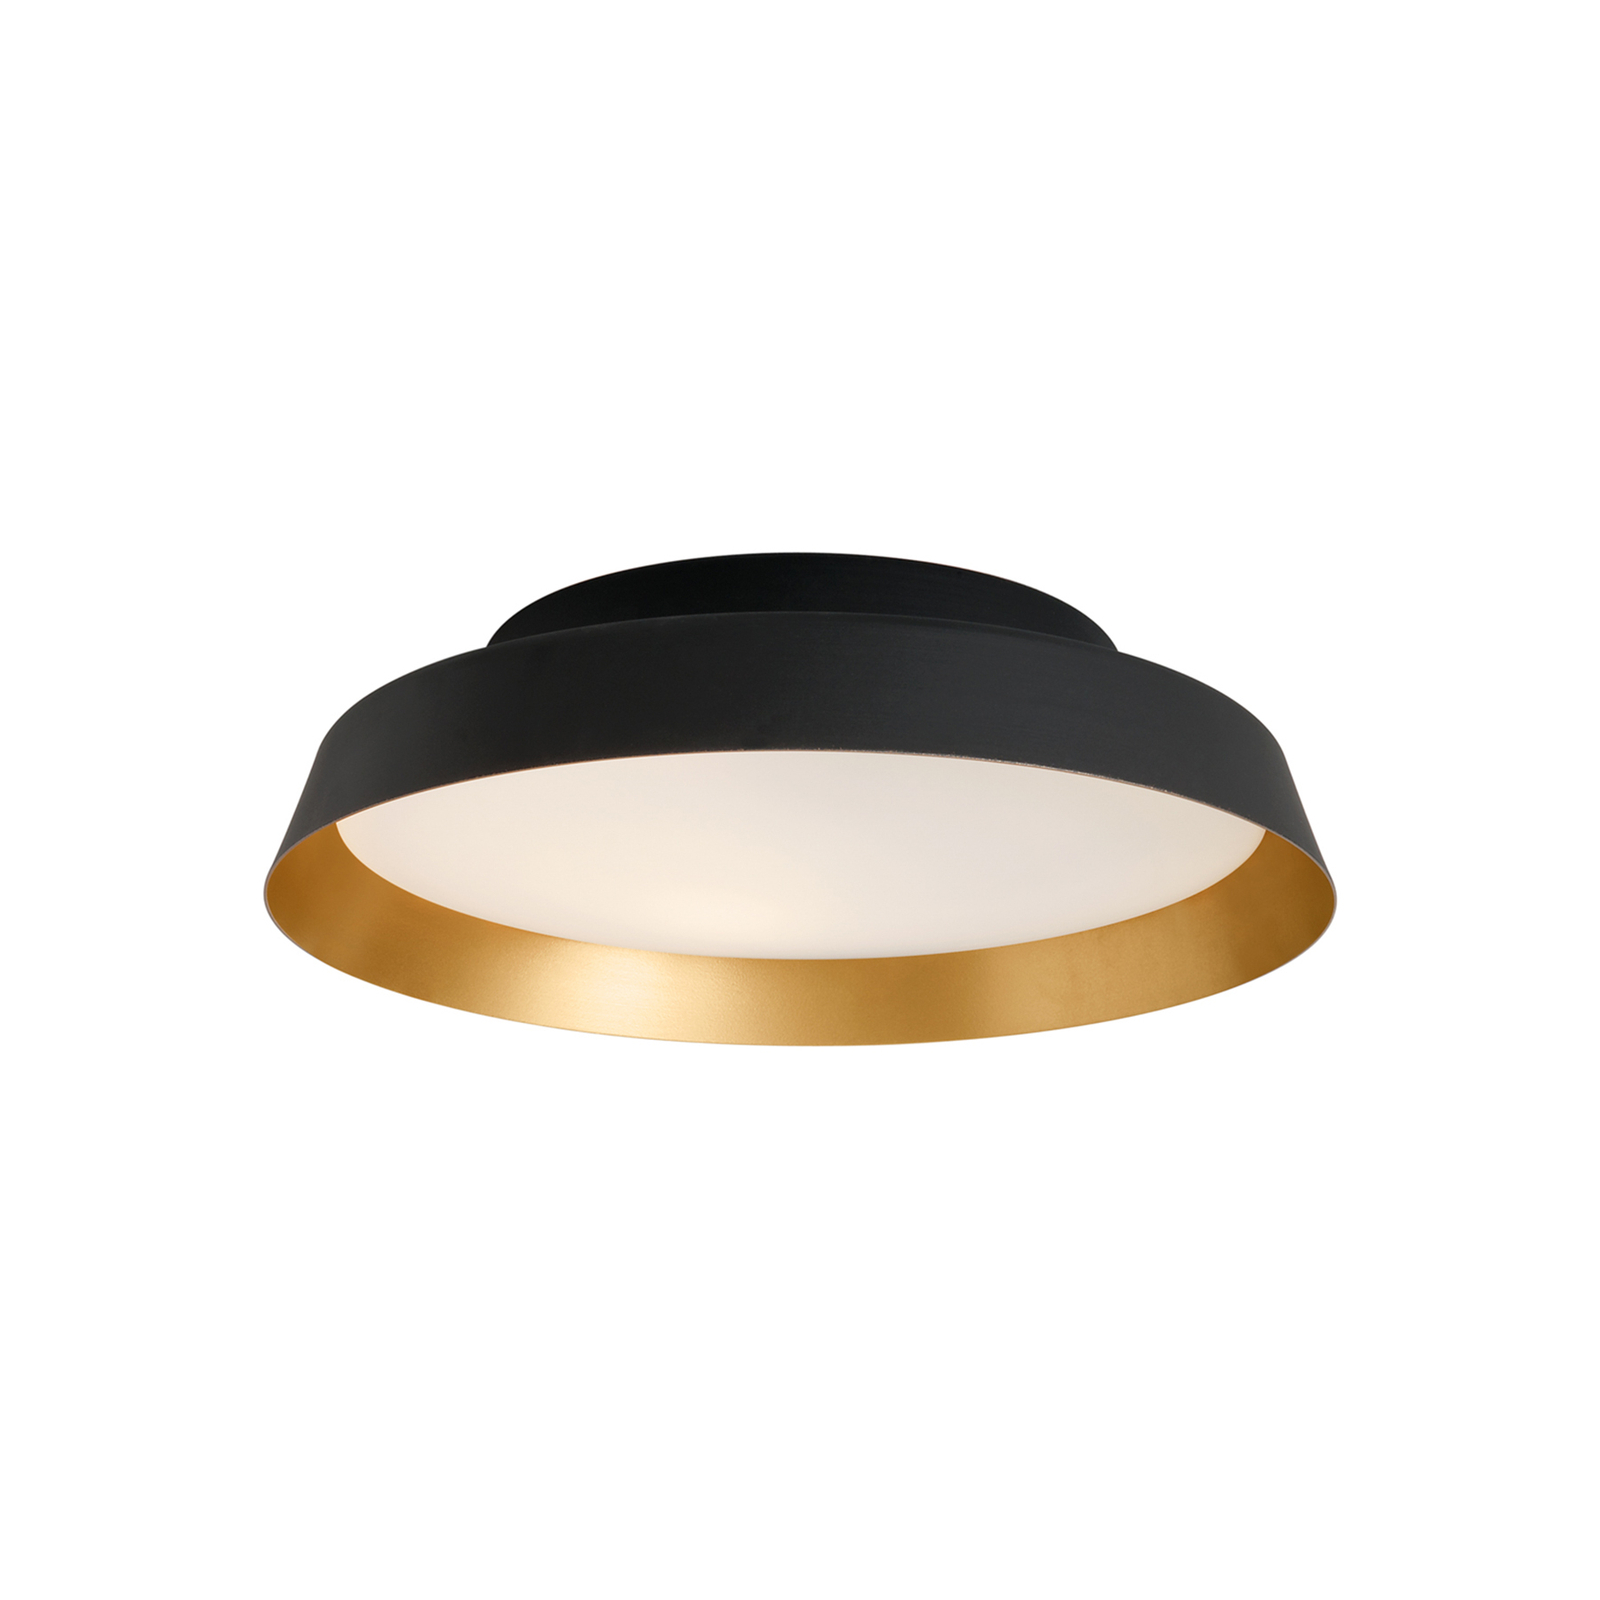 Boop! LED ceiling light Ø 37 cm black/gold